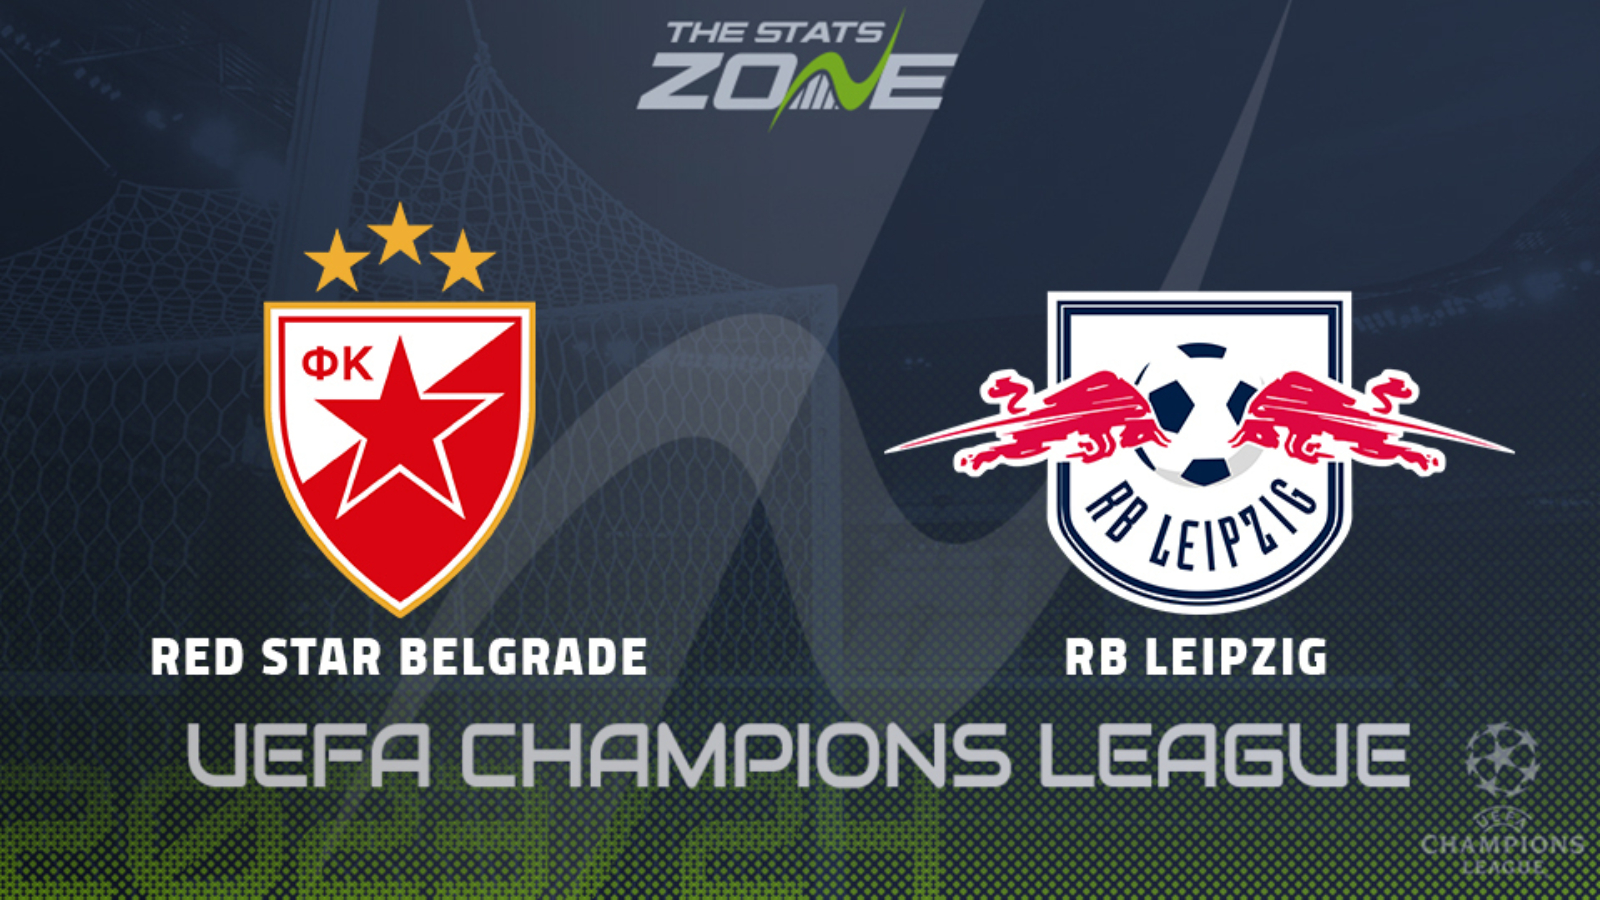 Crvena Zvezda lose out to RB Leipzig 